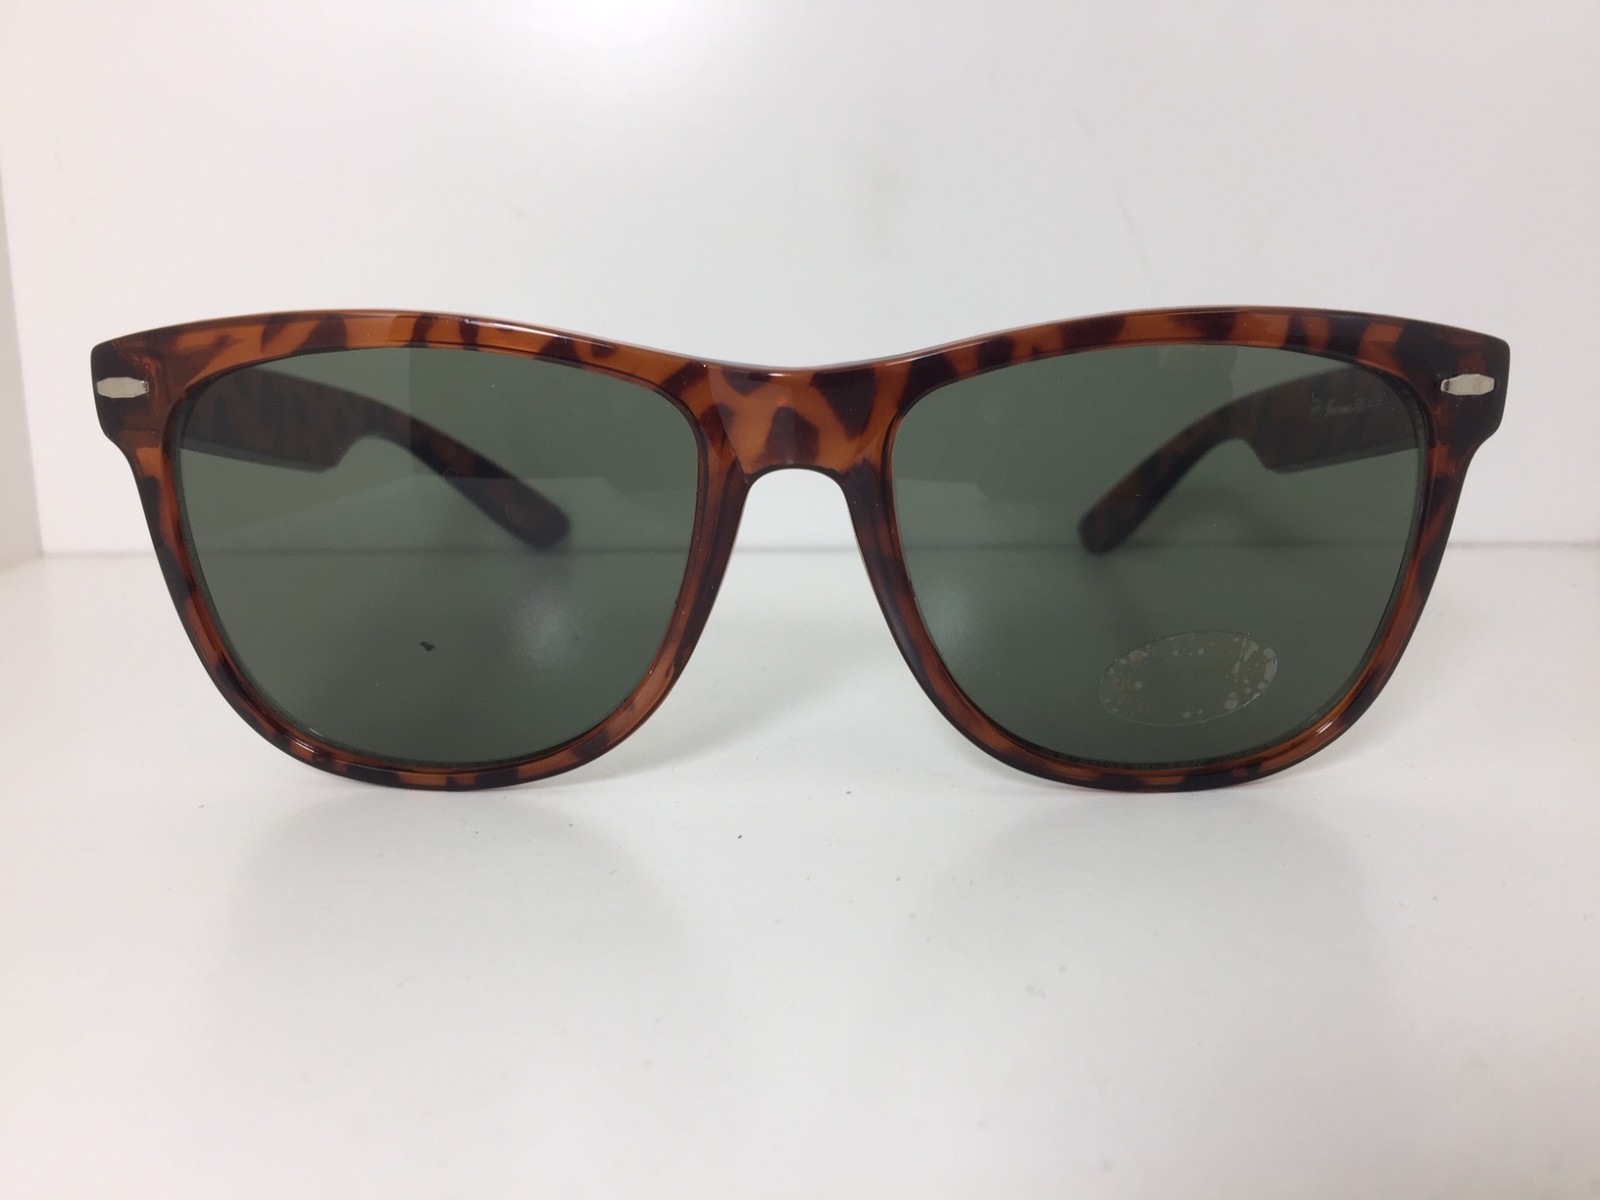 Wayfarer style Sunglasses - look designs